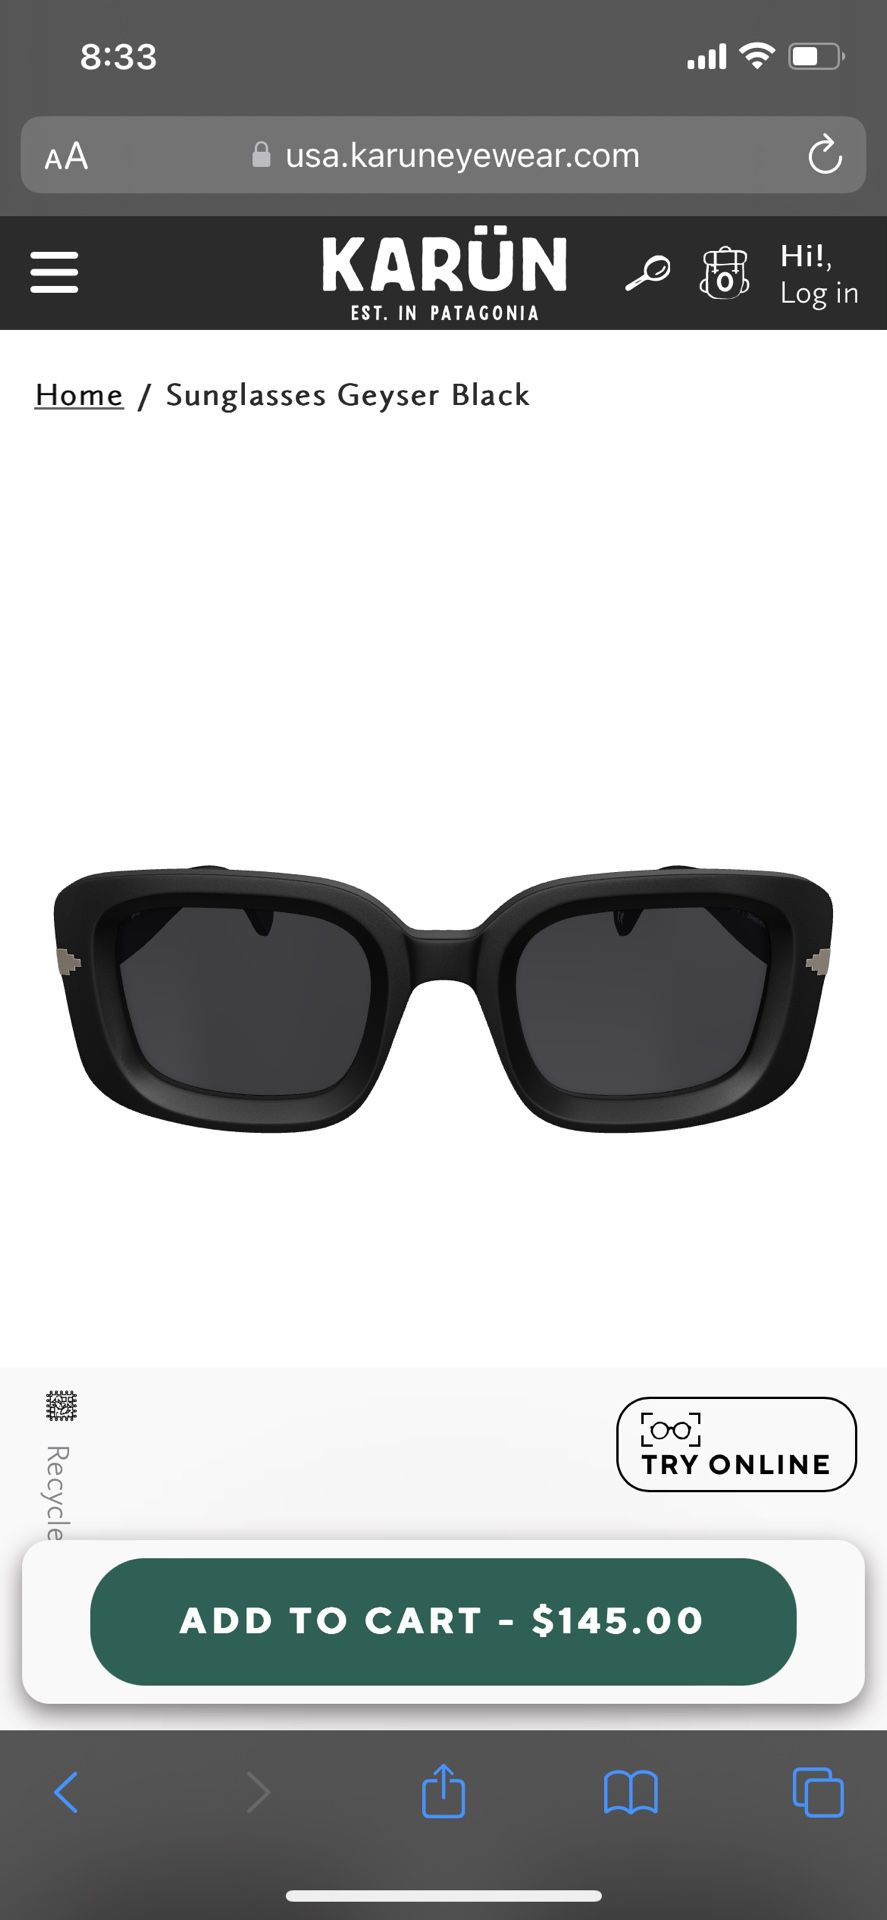 Polarized Karun Sunglasses Geyser Black (NEW) - Retails $145